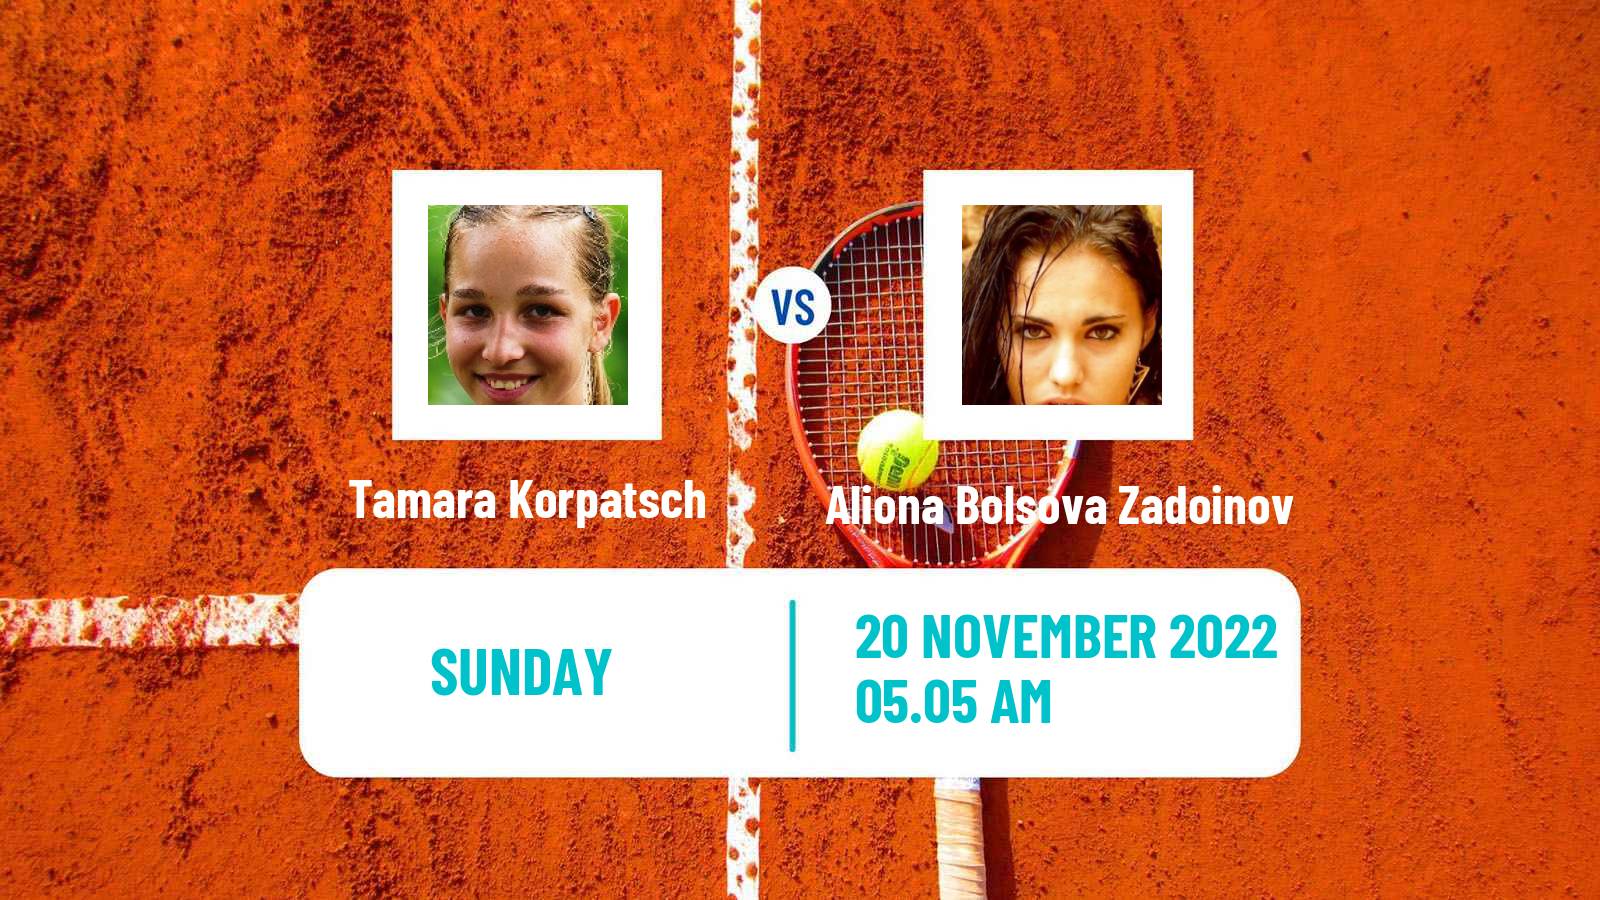 Tennis ITF Tournaments Tamara Korpatsch - Aliona Bolsova Zadoinov